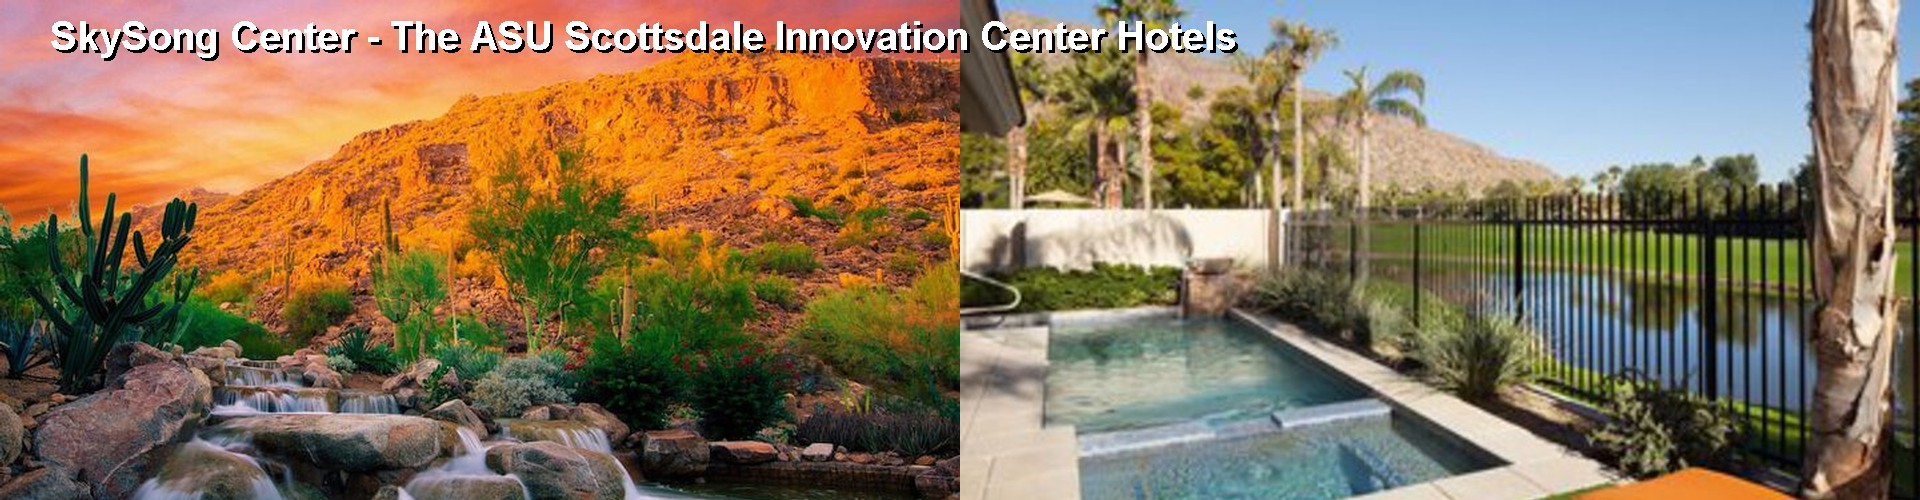 2 Best Hotels near SkySong Center - The ASU Scottsdale Innovation Center